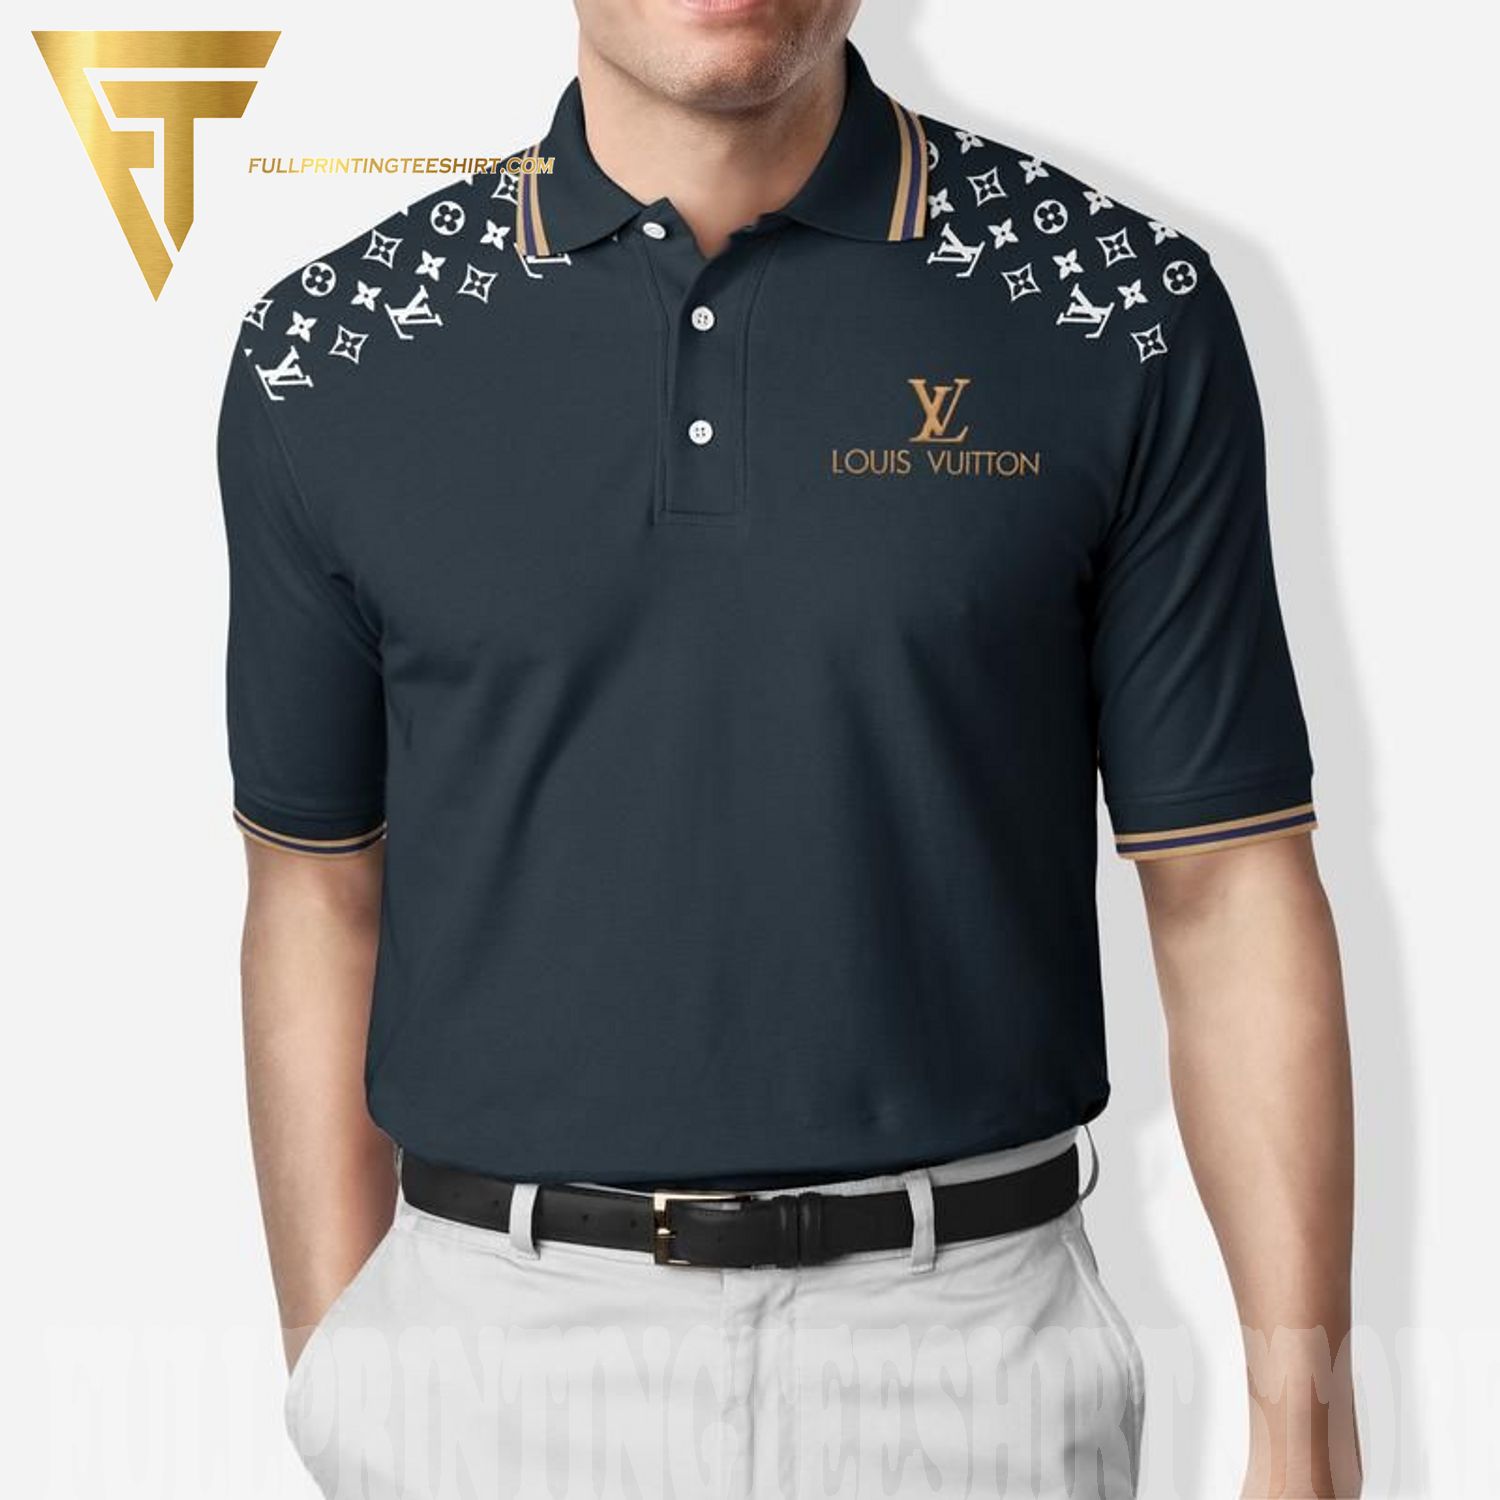 Stijgen Leonardoda Vertrappen Top-selling Item] Louis Vuitton Monogram Classic Street Style All Over  Print Polo Shirt